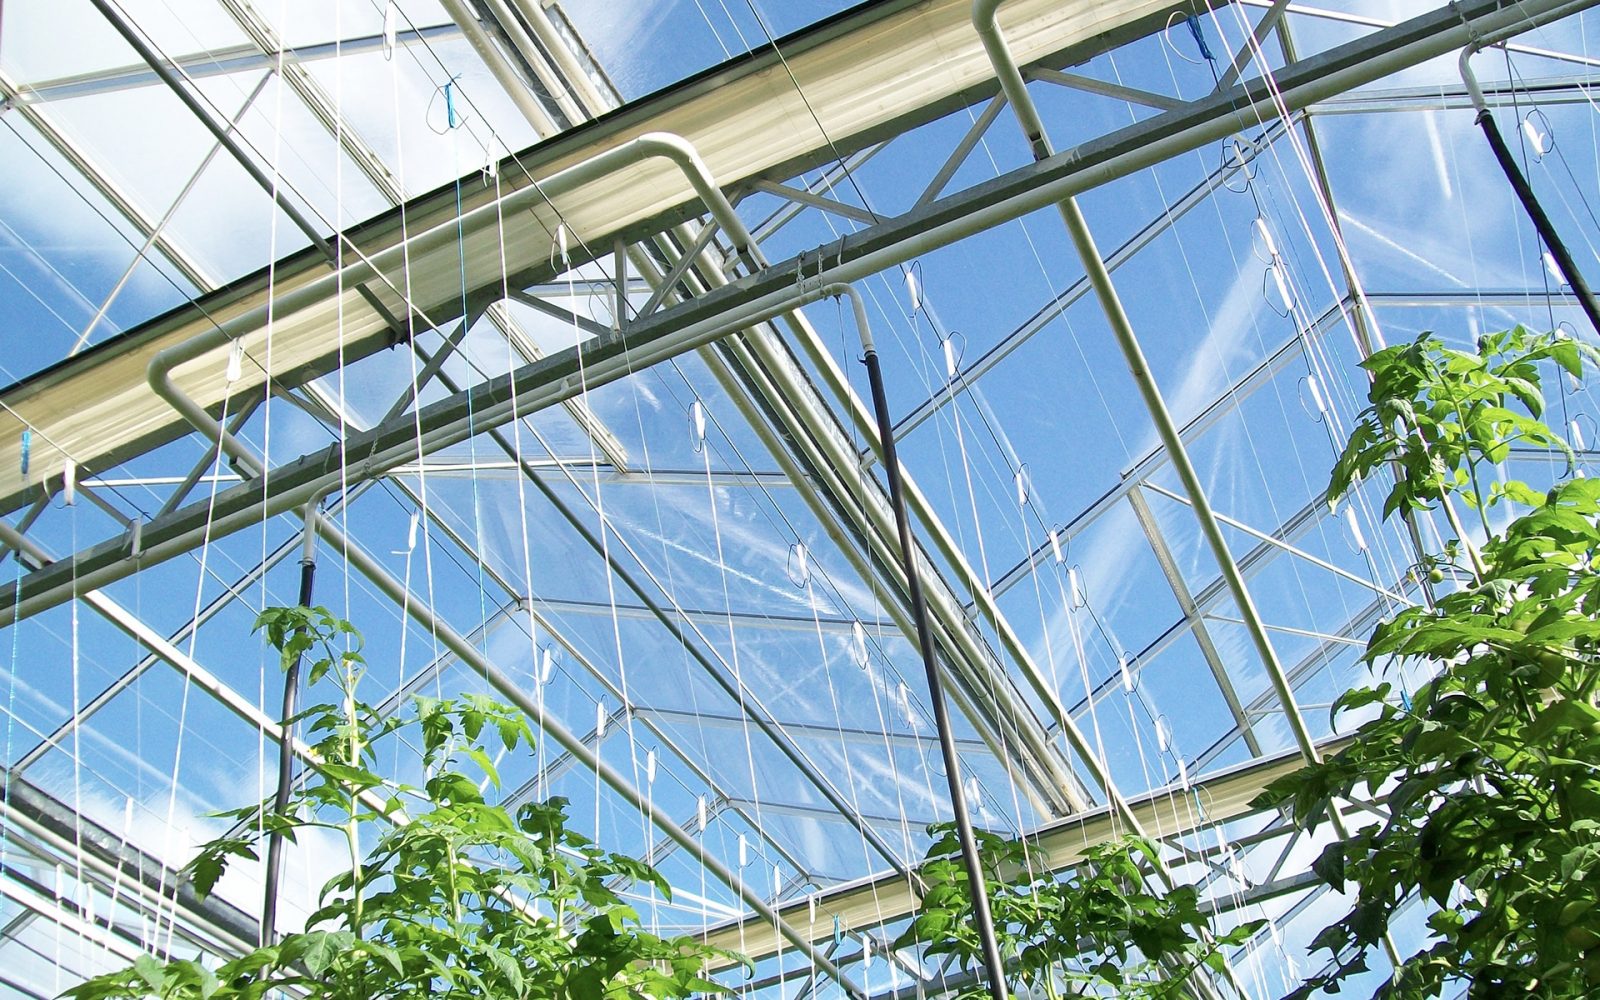 Greenhouse glass panes